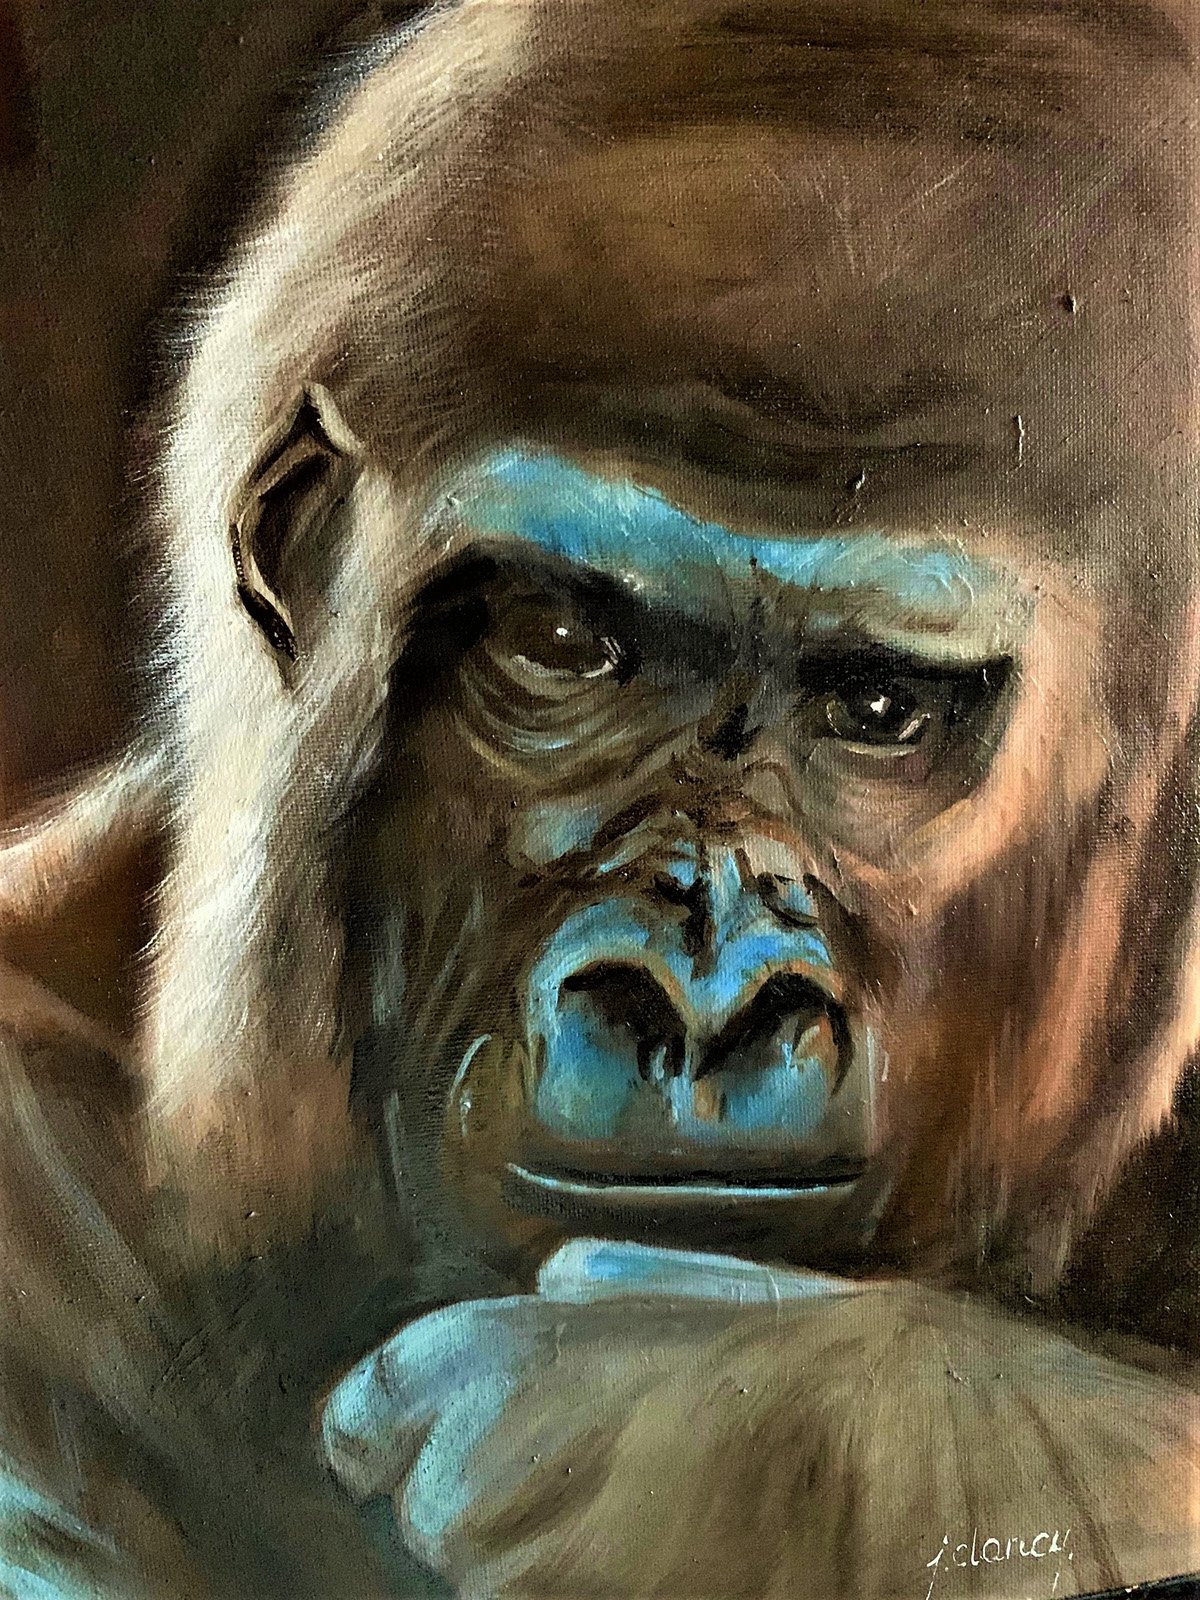 Gorilla © 2022 Jody Goldman. All Rights Reserved.